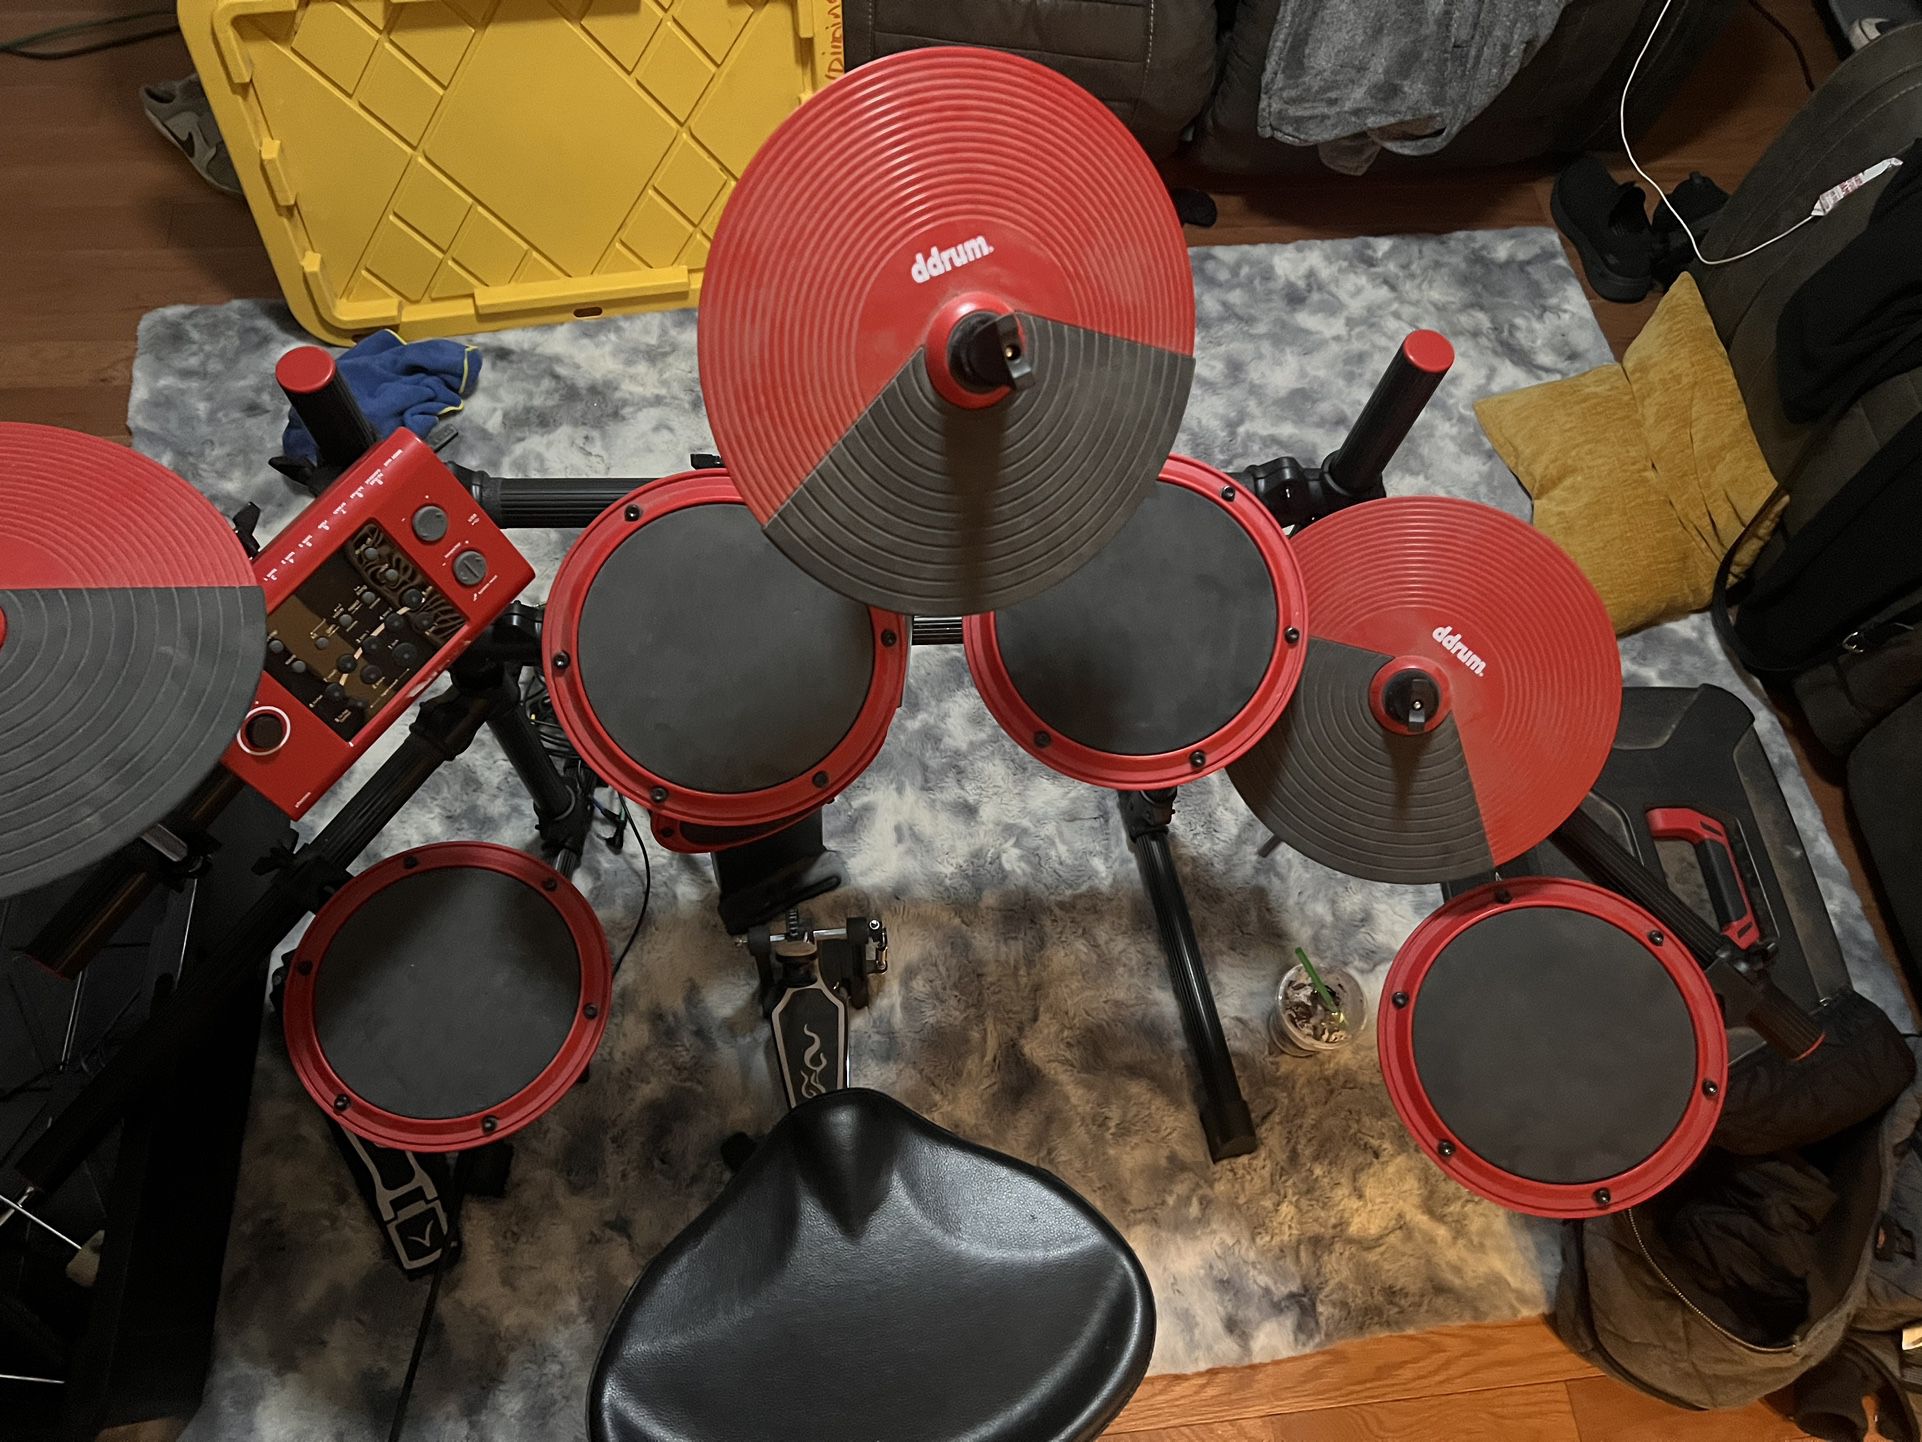 Electric Drum set 